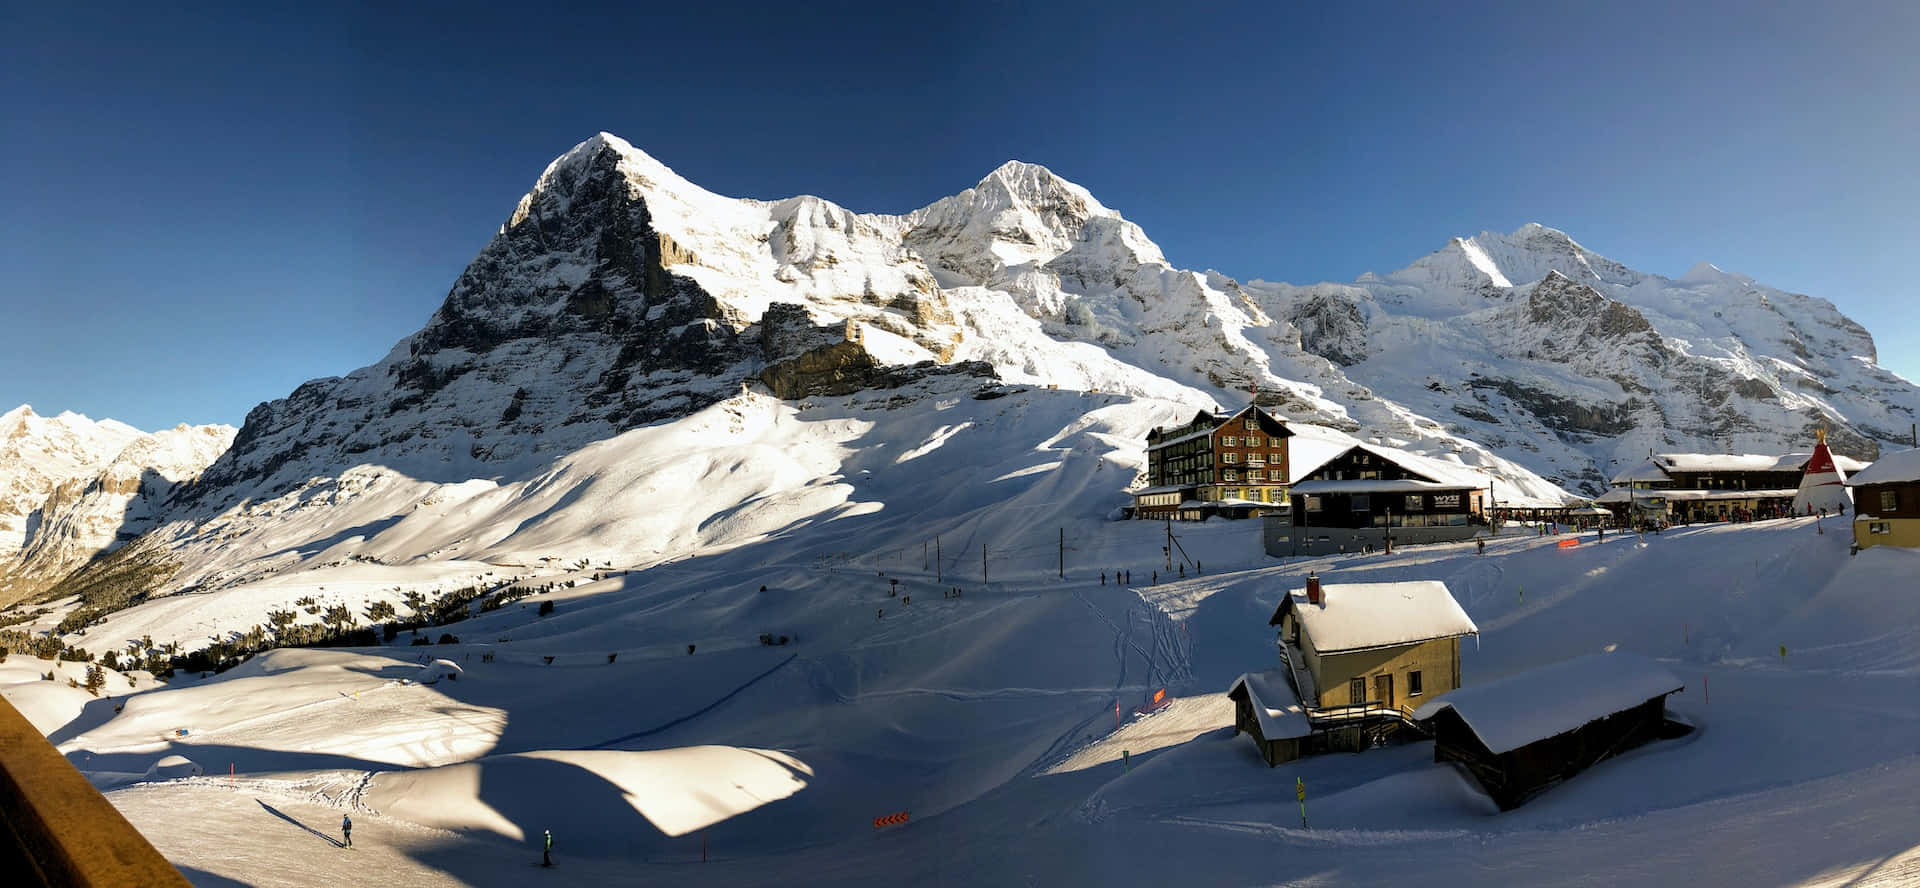 Stunning Ski Resort in Winter Wonderland Wallpaper